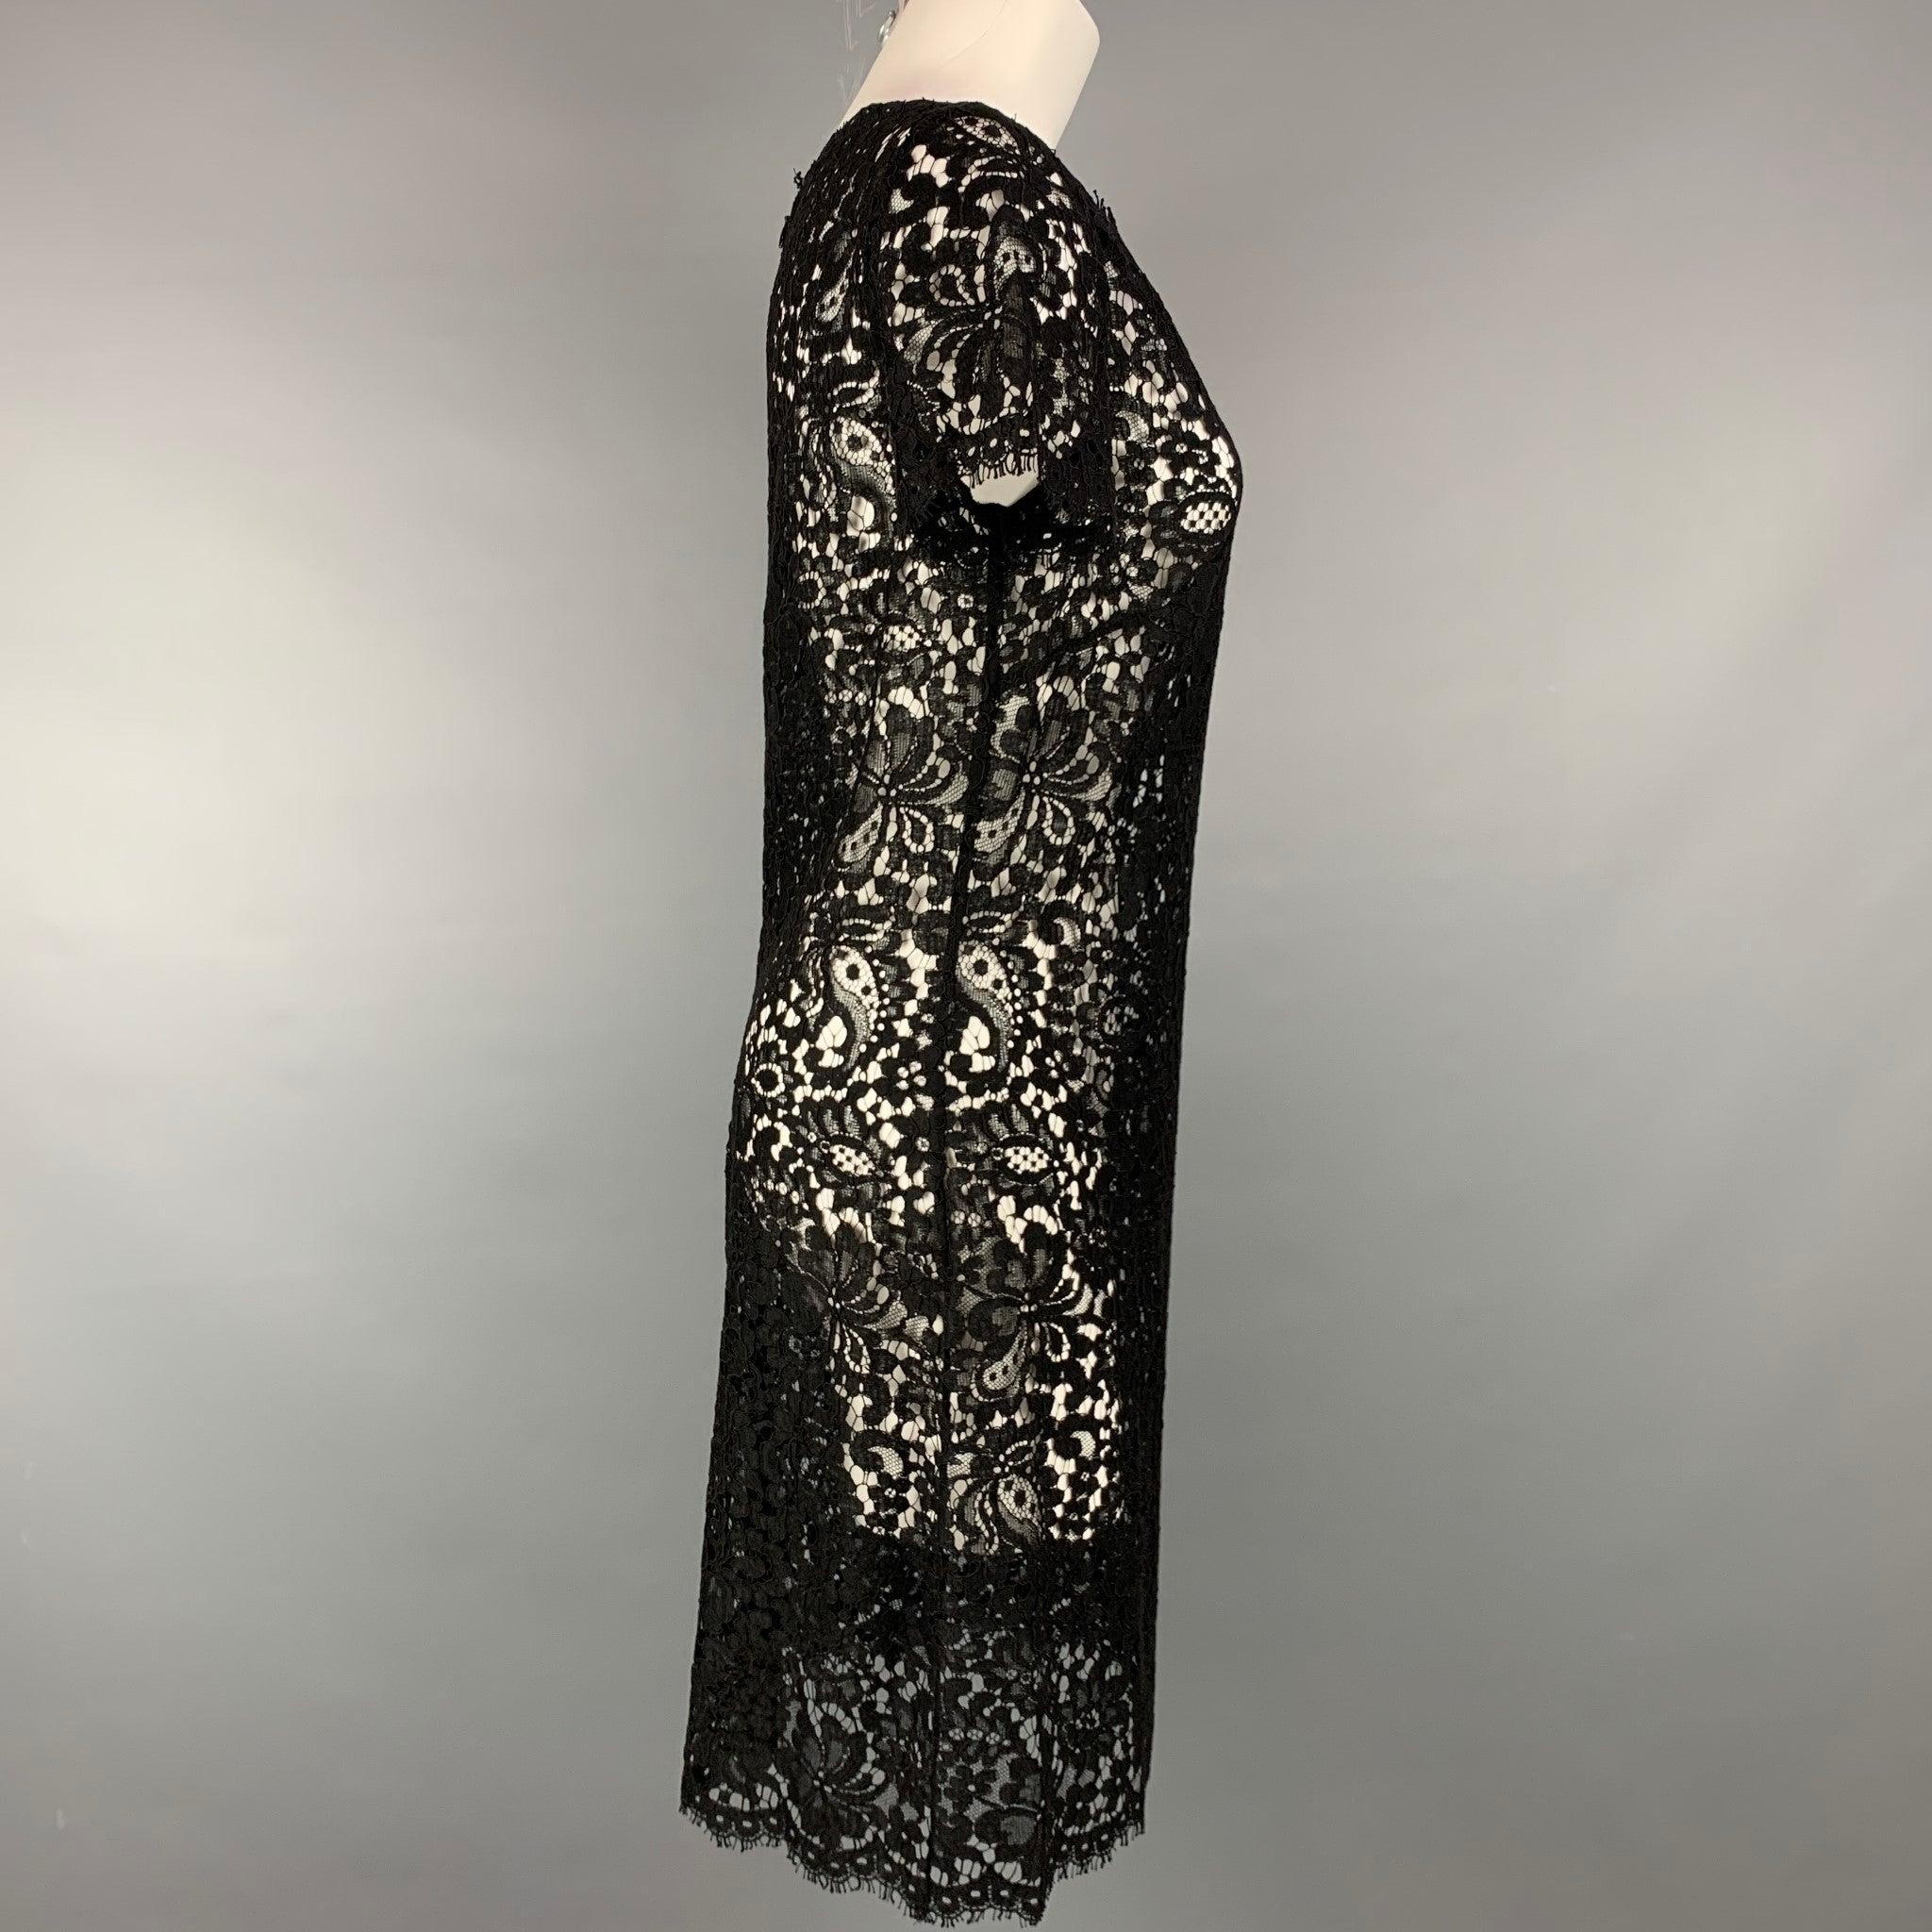 RALPH LAUREN Black Label Size 10 Black Lace Cotton Blend Cocktail Dress In Good Condition For Sale In San Francisco, CA